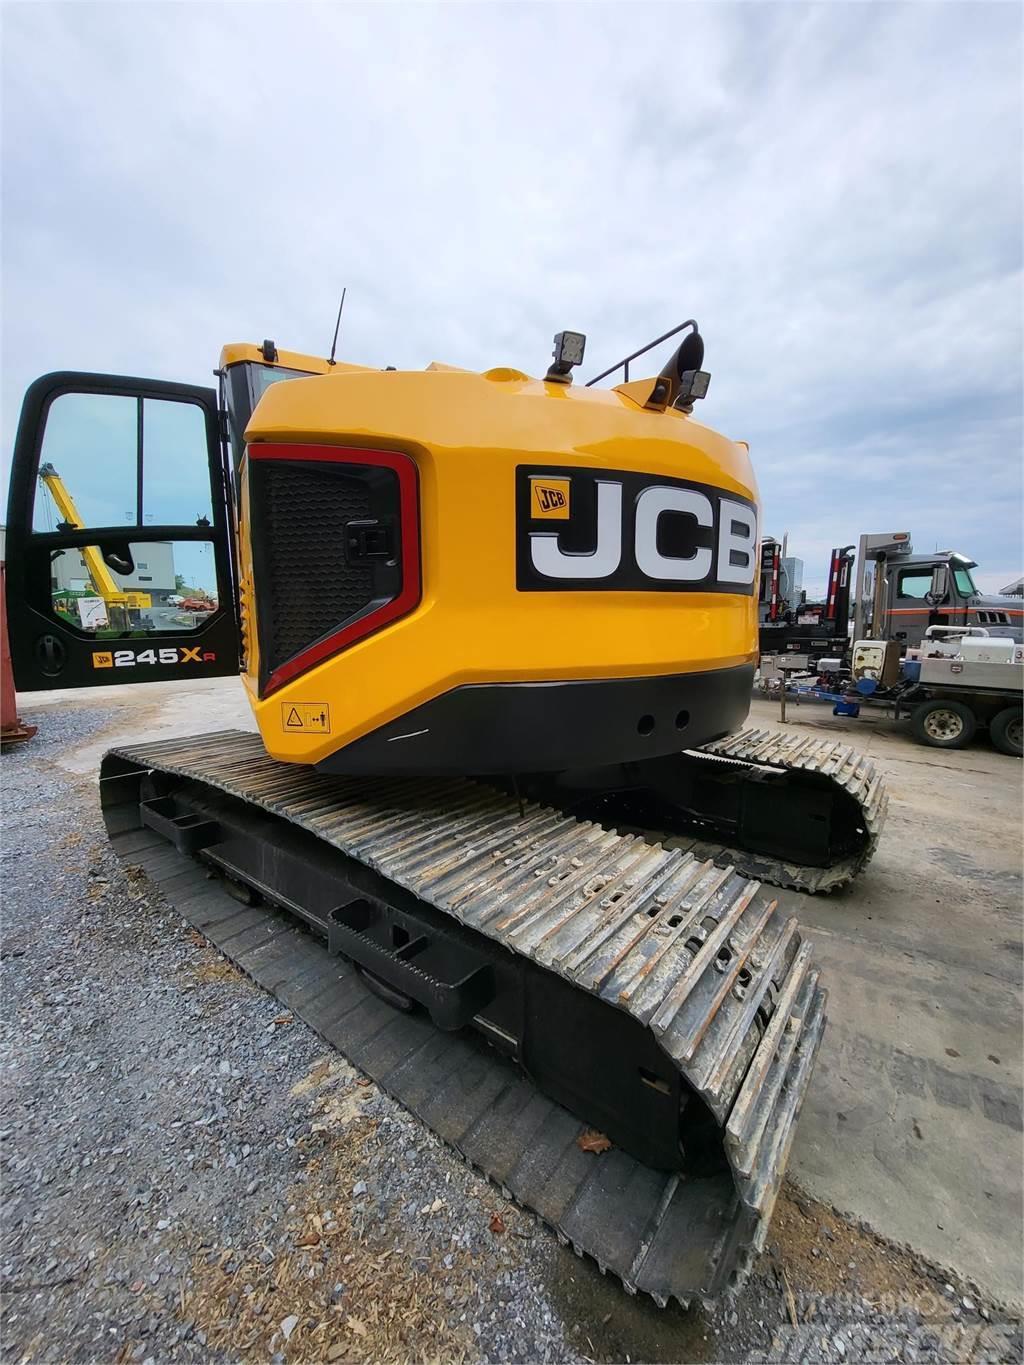 JCB 245XR Crawler excavators